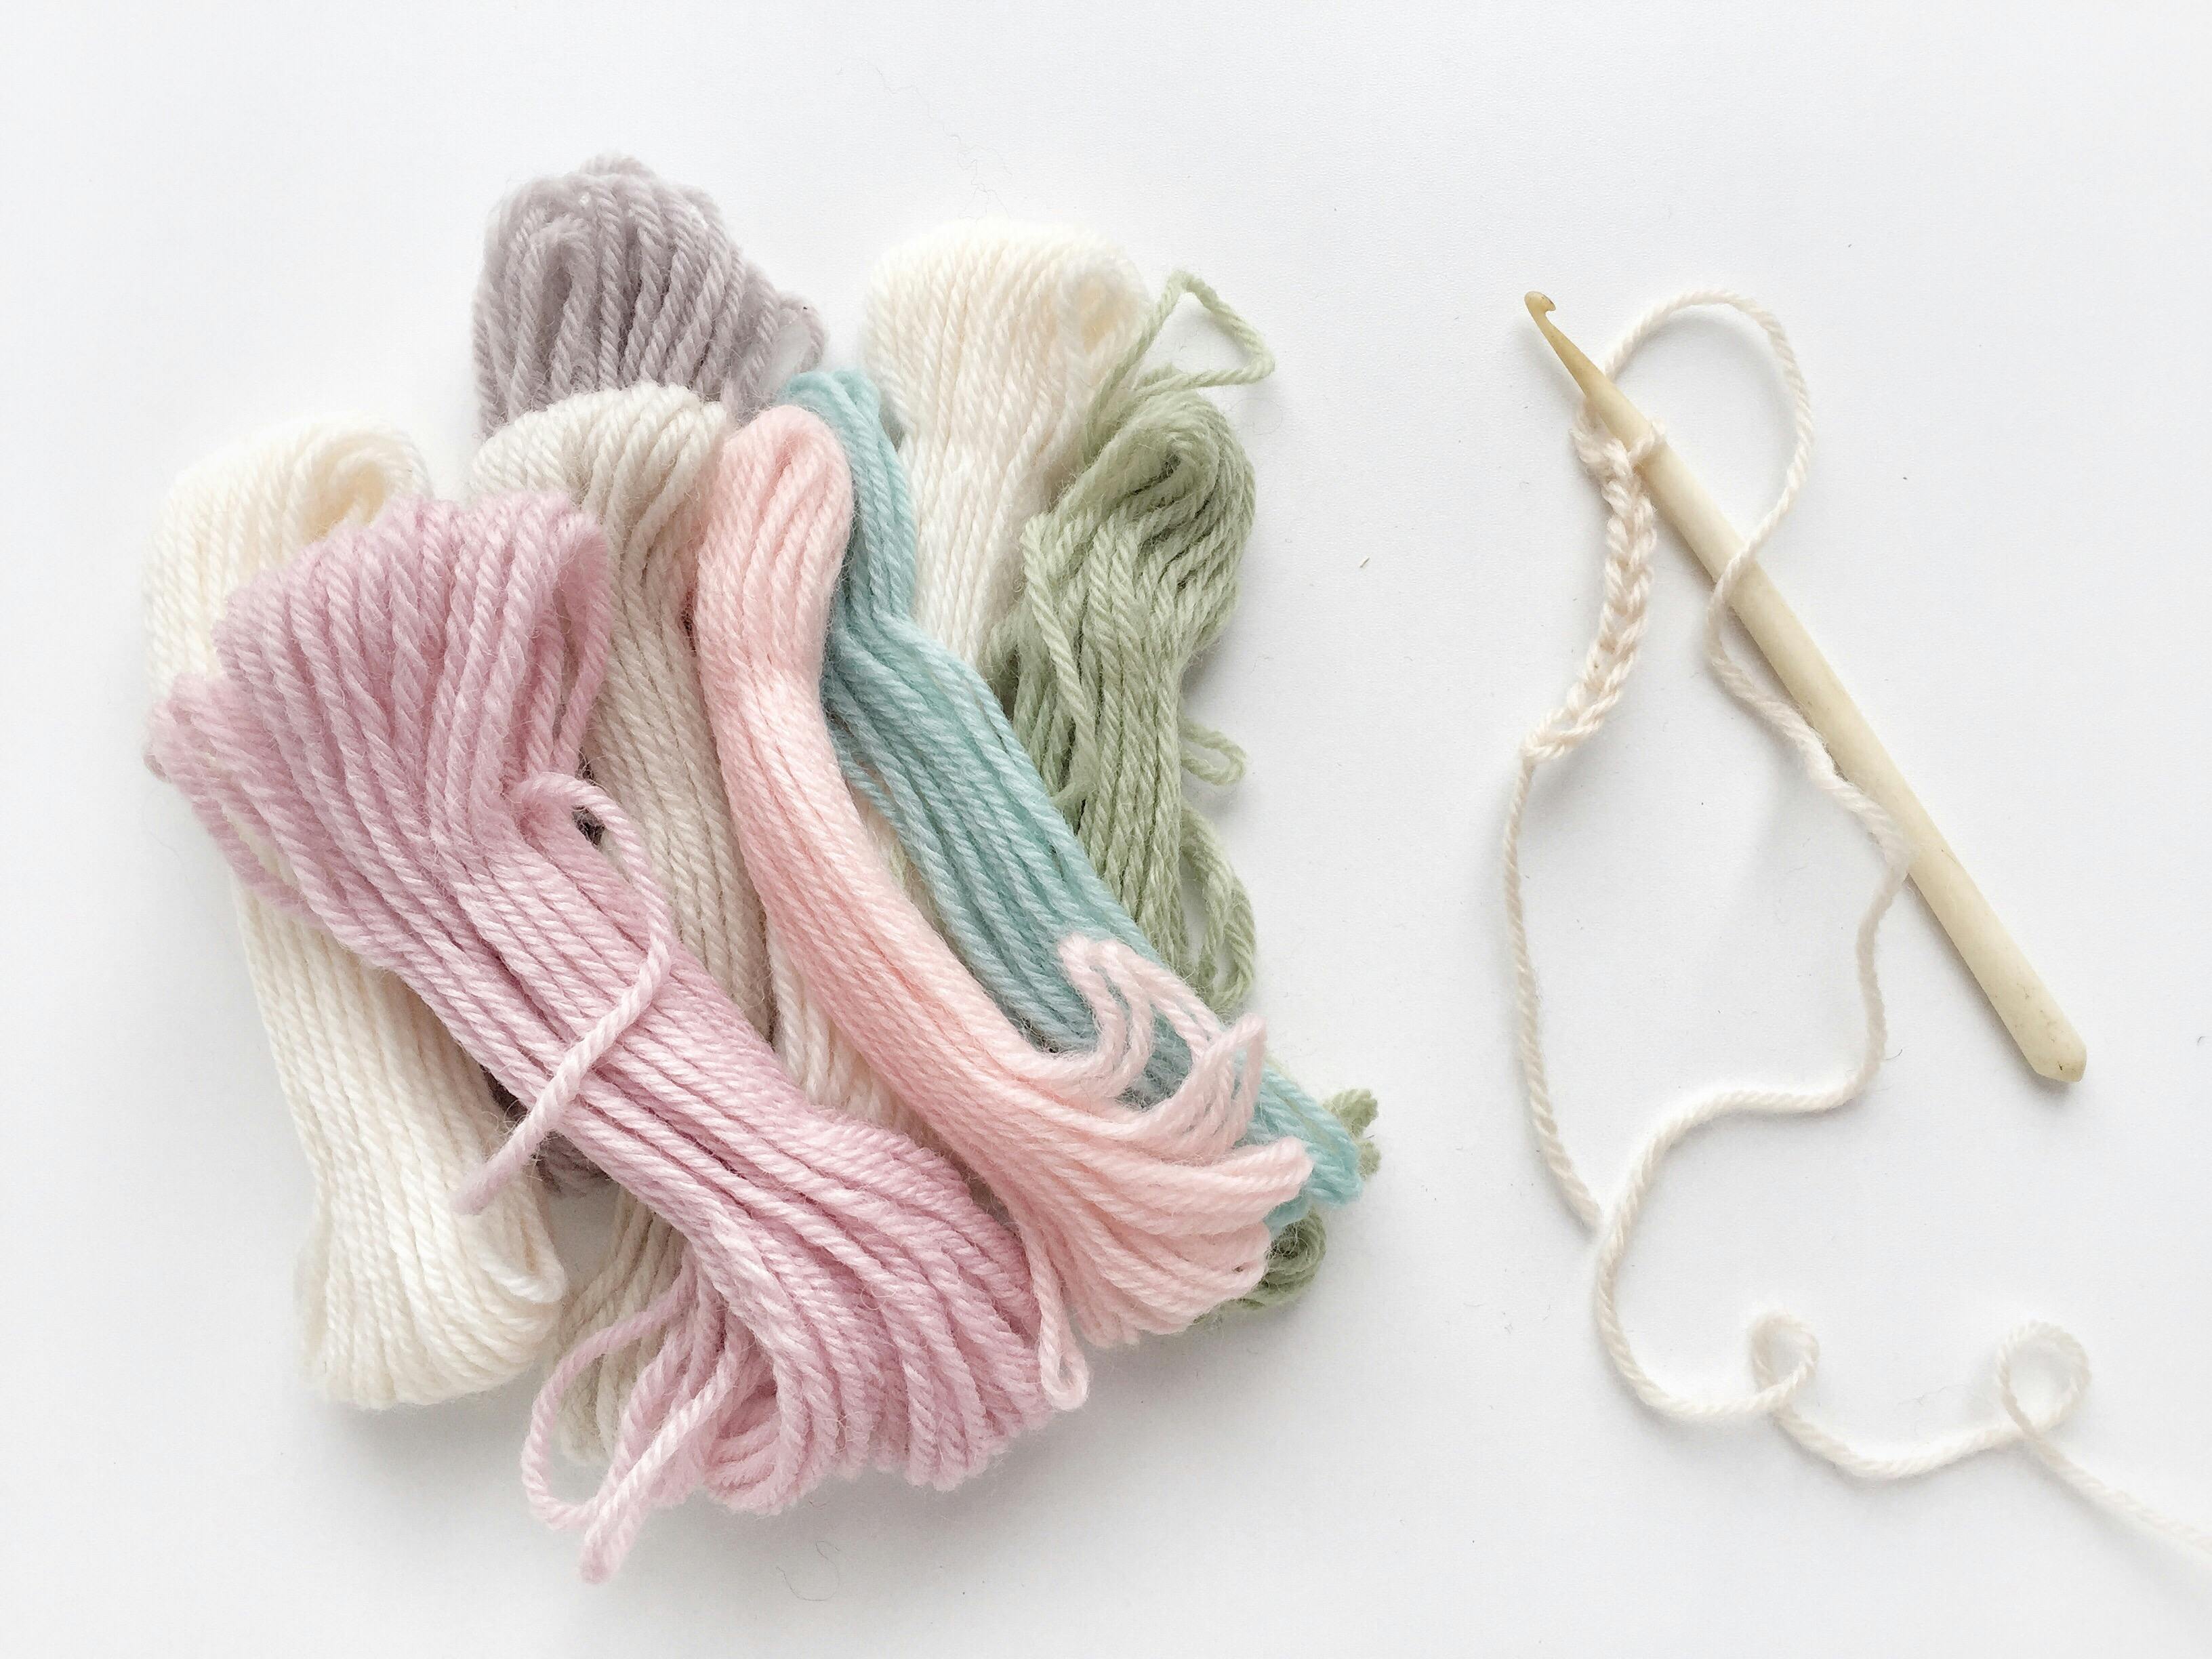  crochet hook with pastel yarns